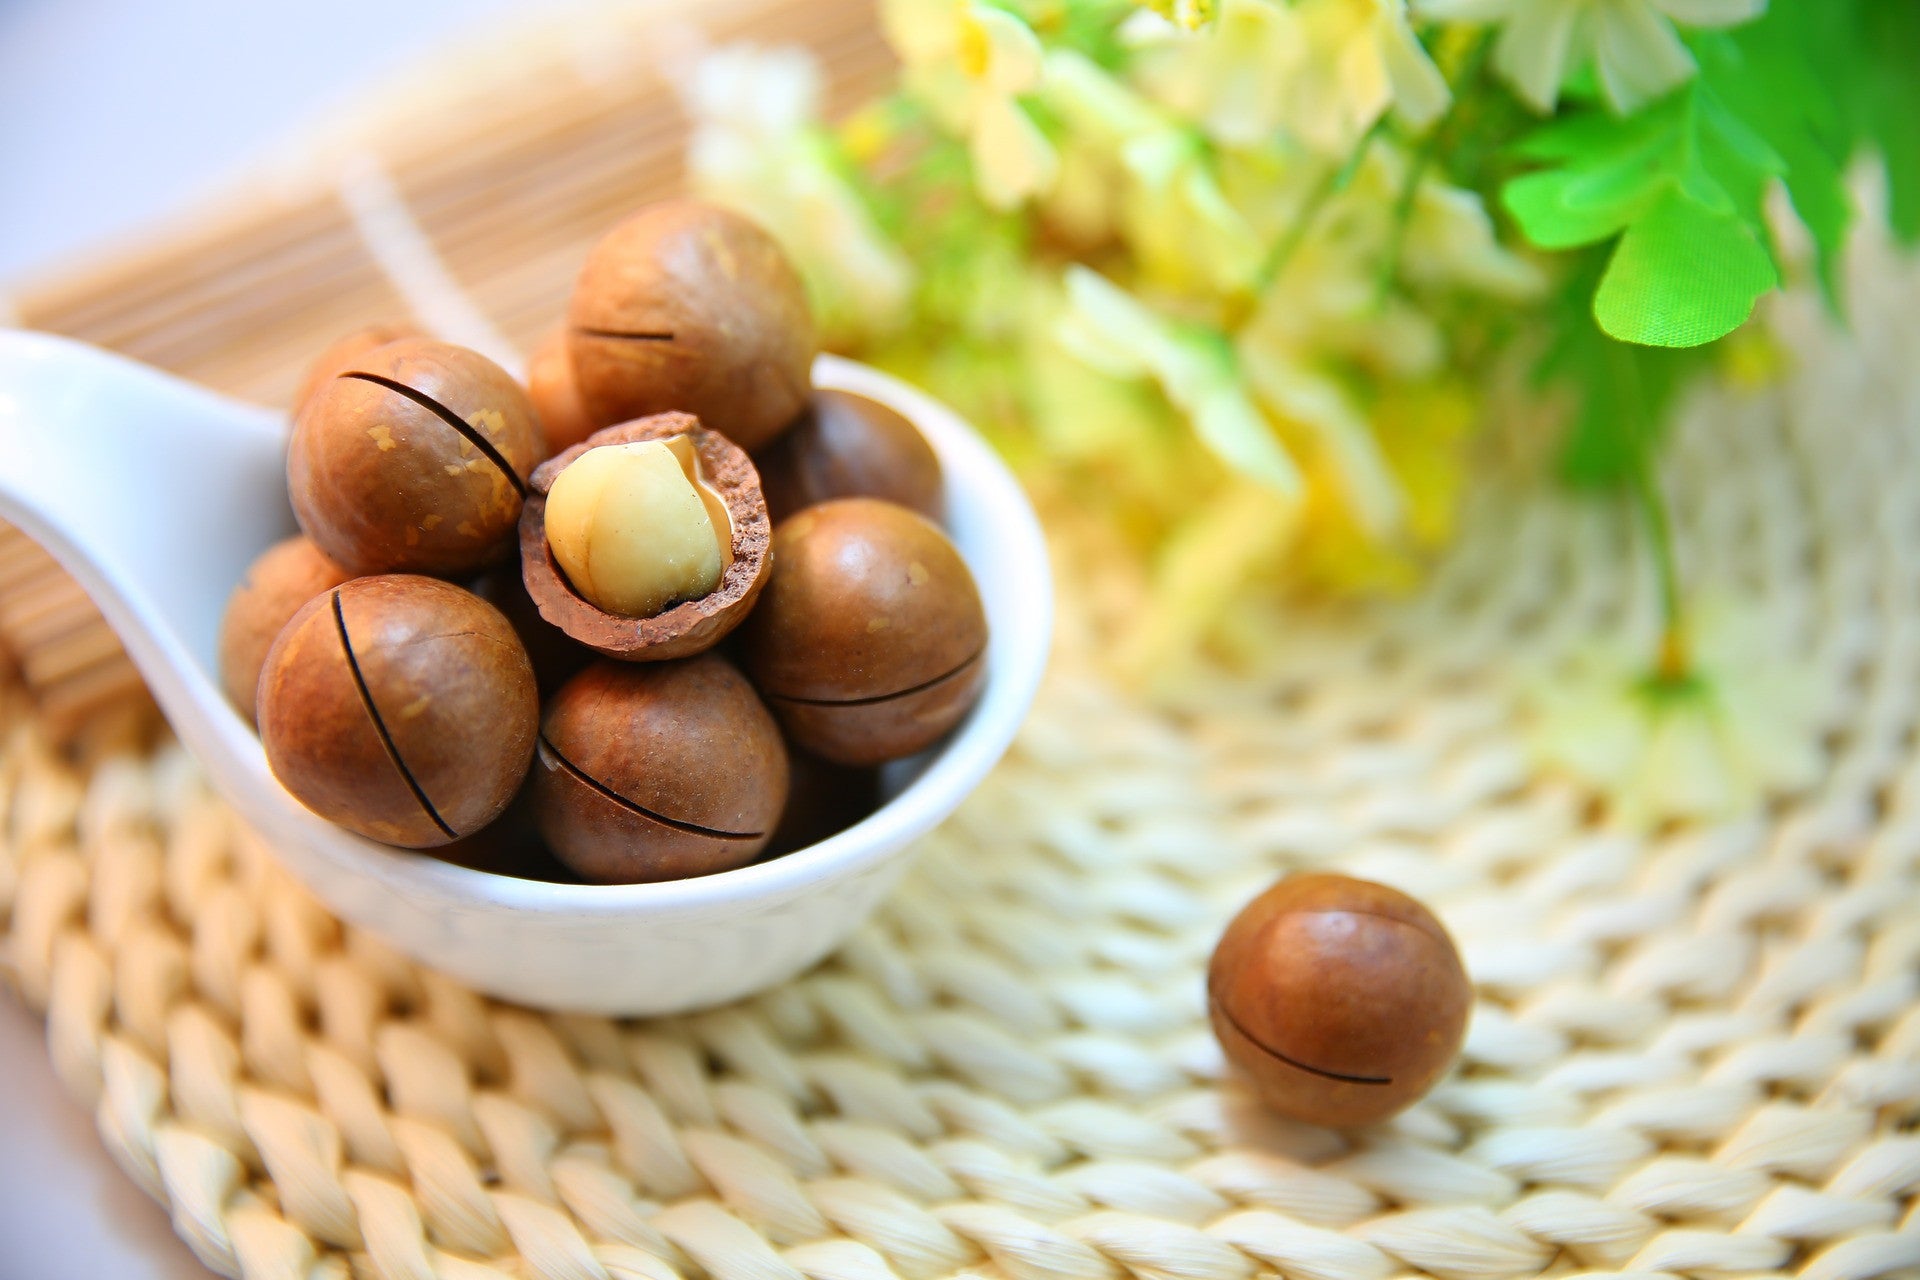 How to grow macadamia nuts?